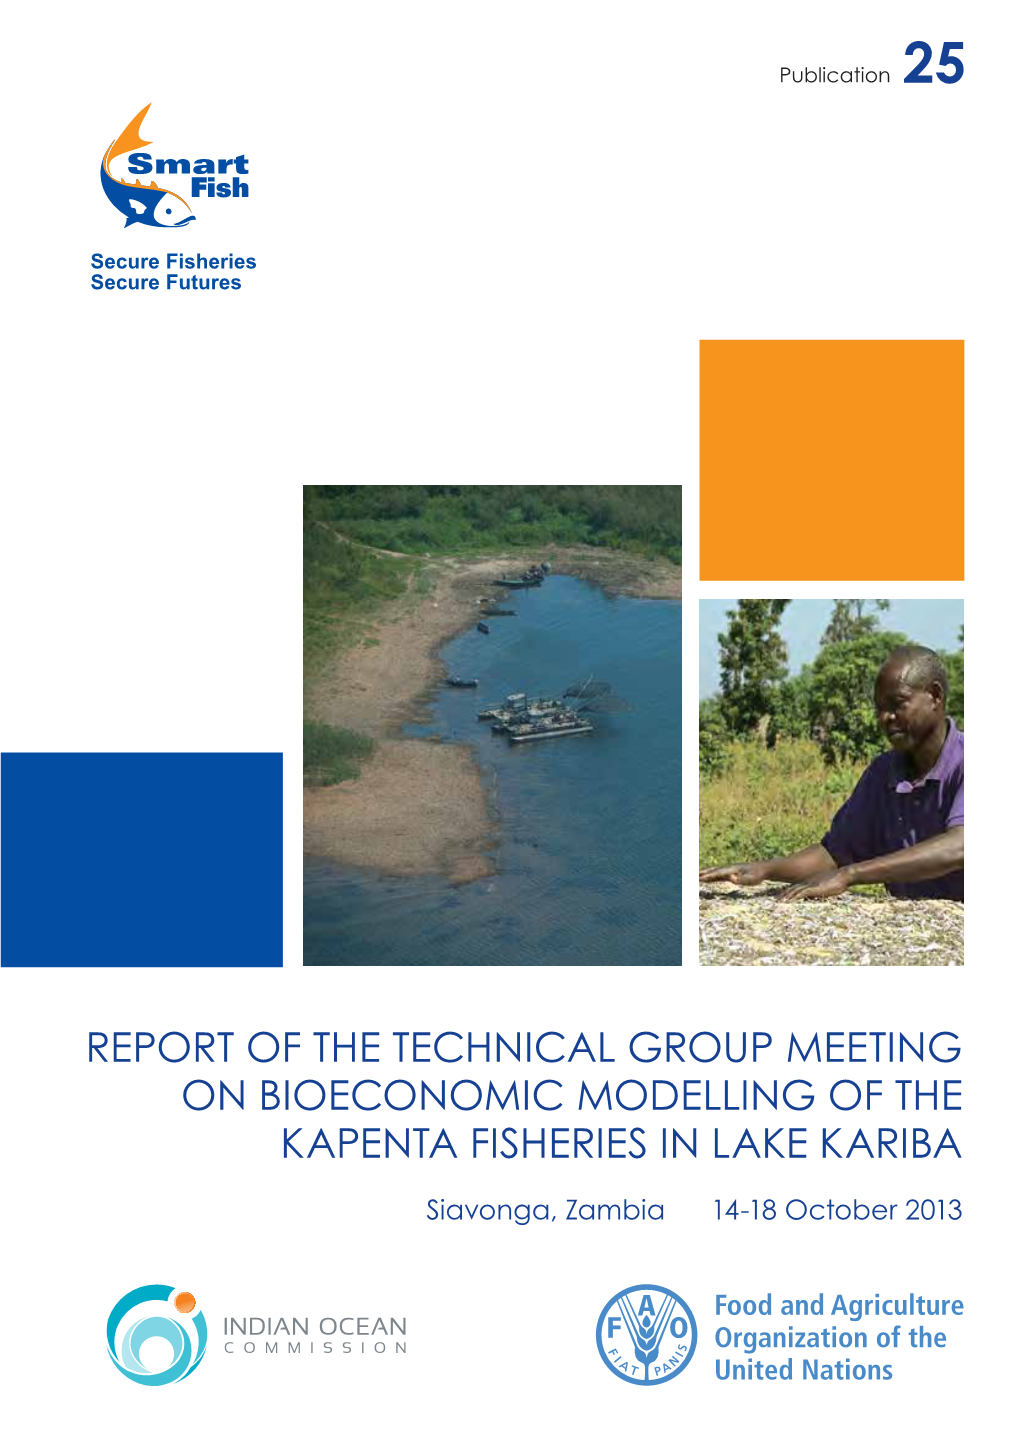 Report of the Technical Group Meeting on Bioeconomic Modelling of the Kapenta Fisheries in Lake Kariba